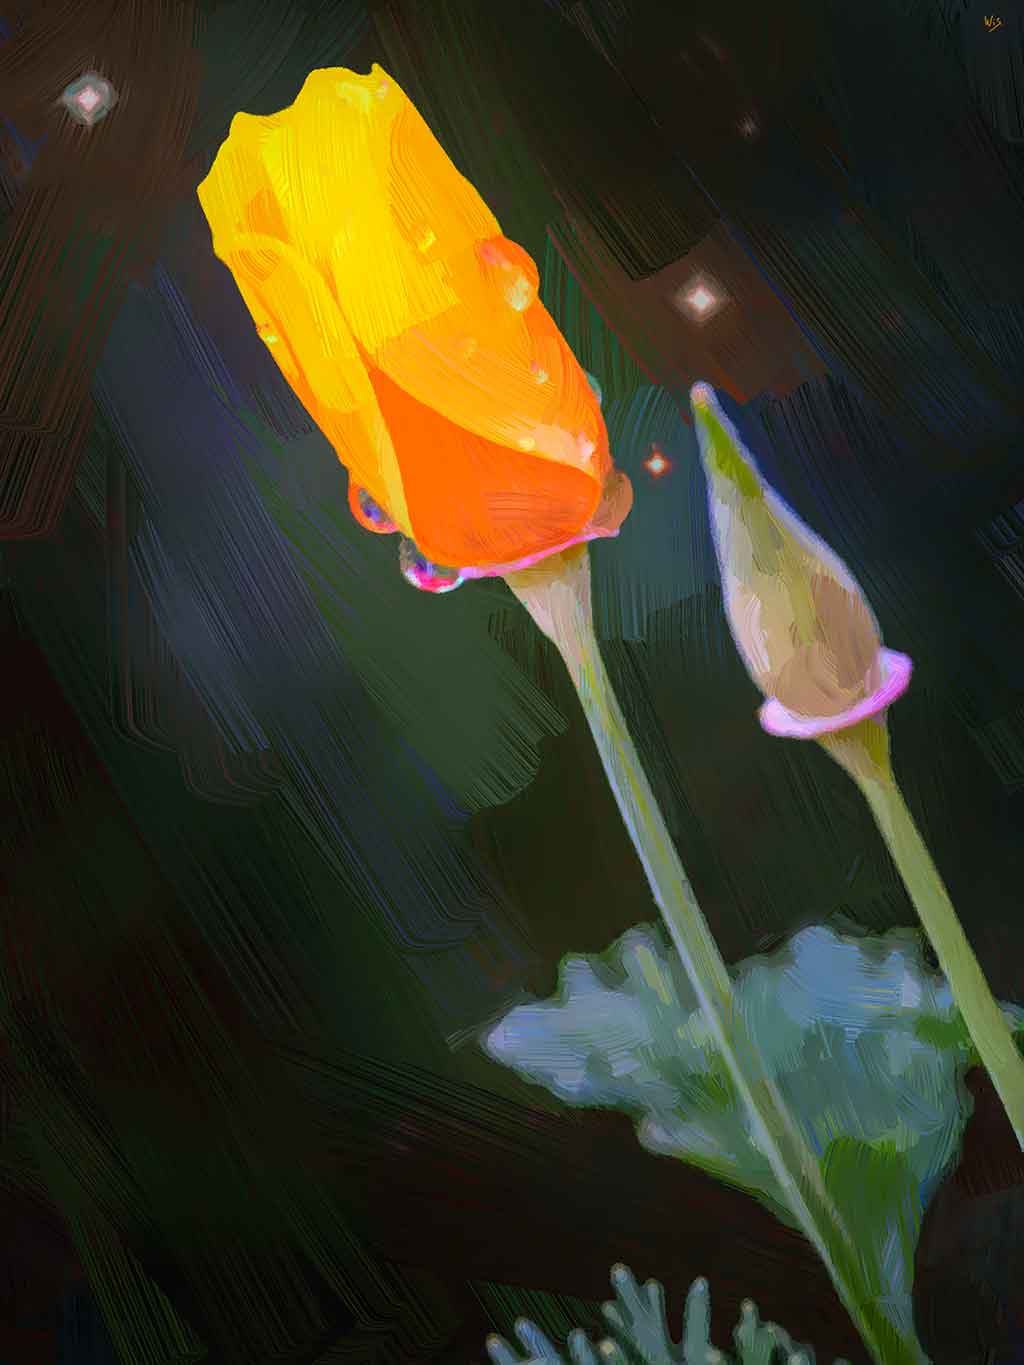 Young orange poppy, dew drops on flower, violent spaces stars in background; painting by Wiesław Sadurski.